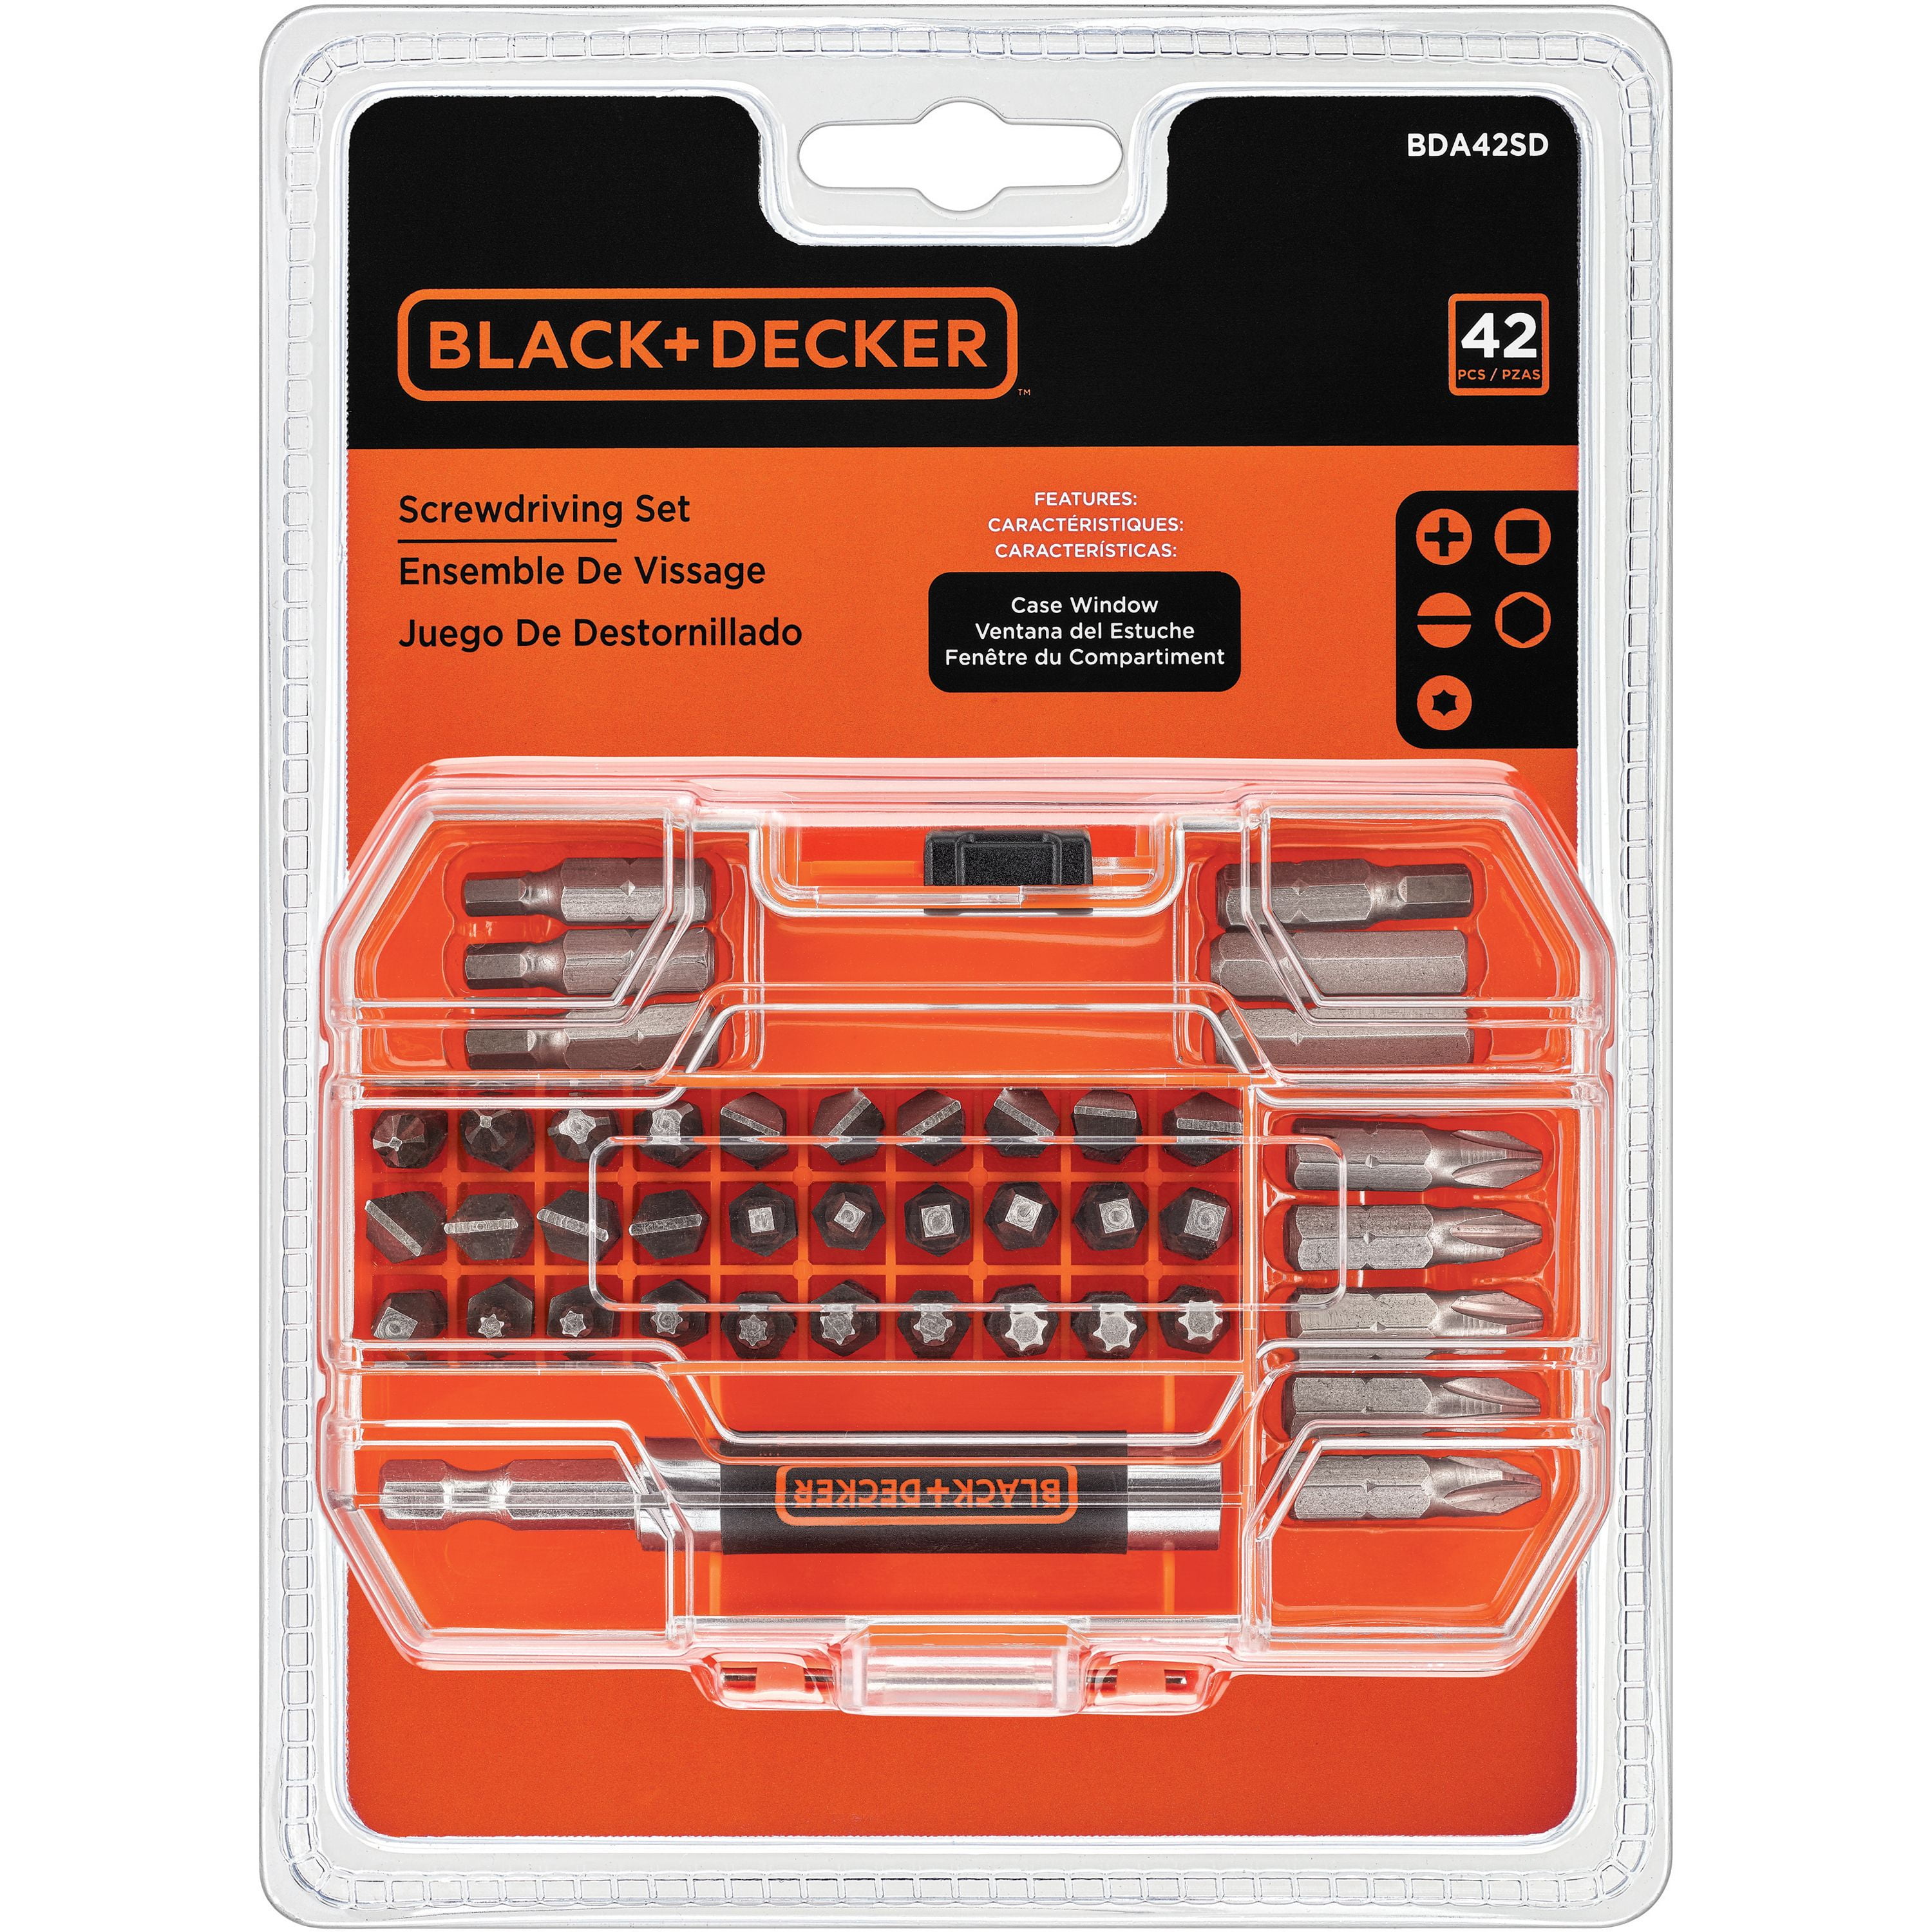 BLACK+DECKER Cordless Screwdriver BCF601AA & BDA42SD Alkaline with Screwdriver Bit Set 42-Piece 